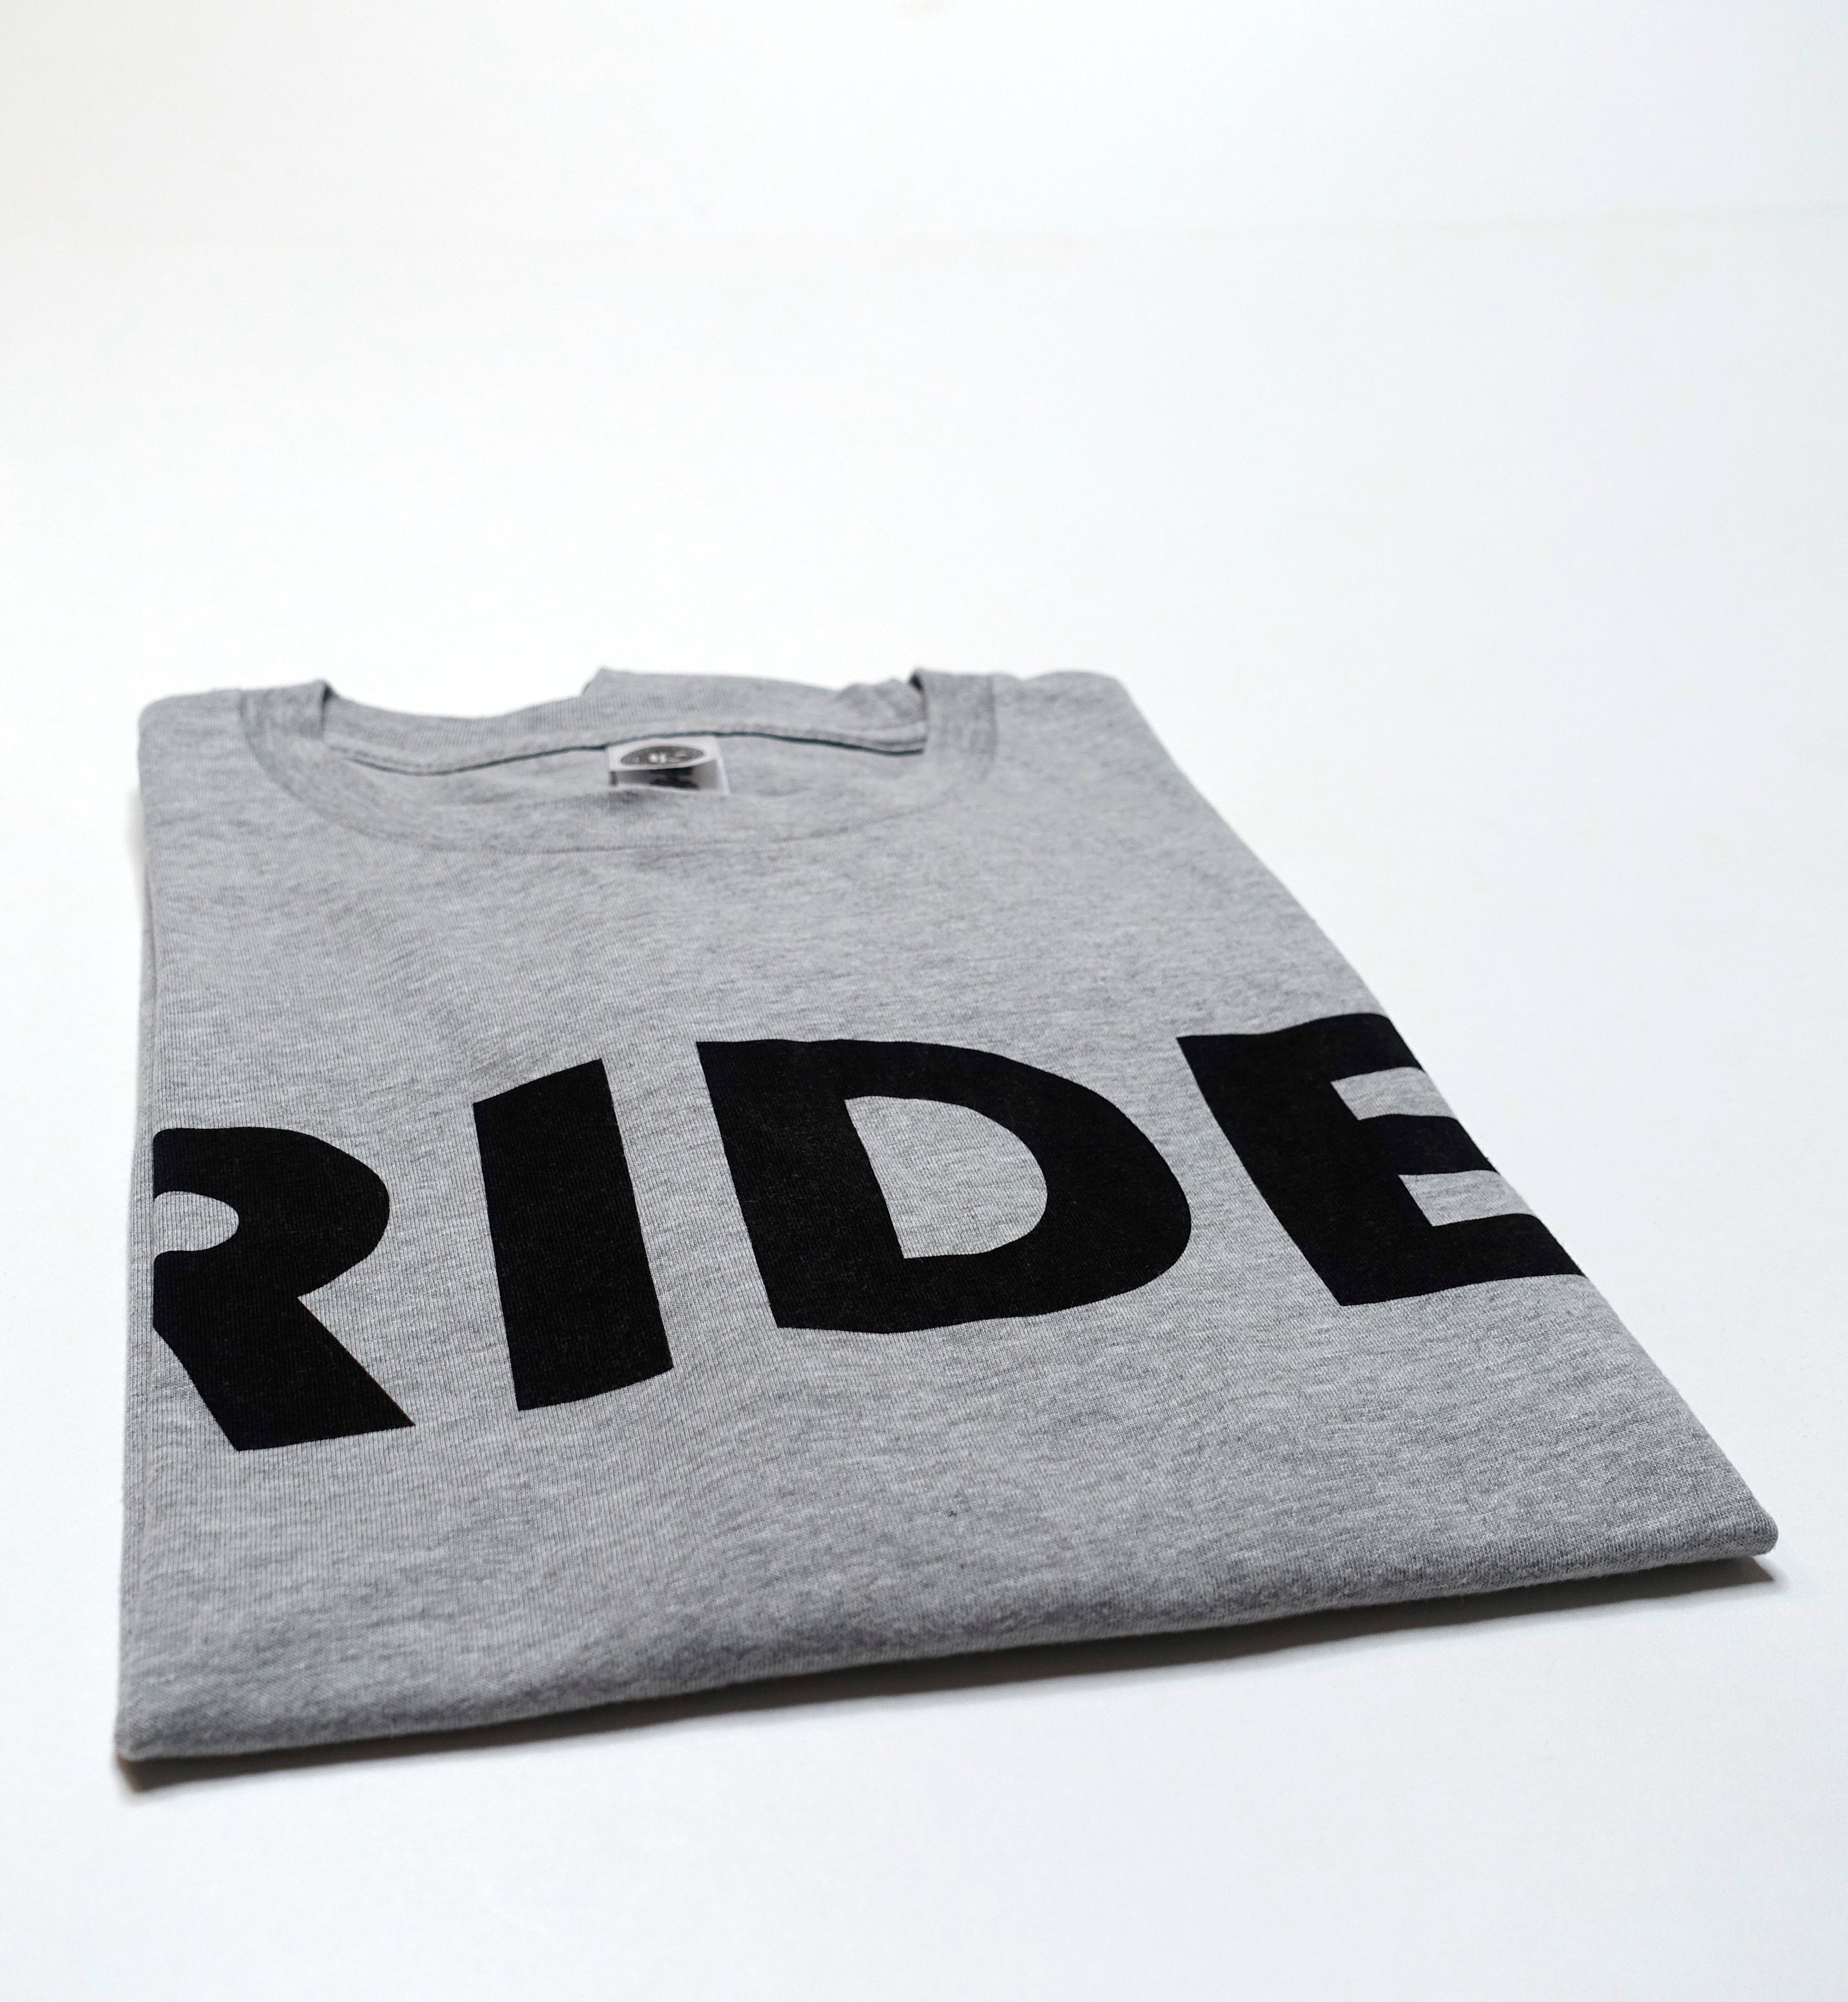 Ride - Logo 2015 US Tour Shirt Size XL